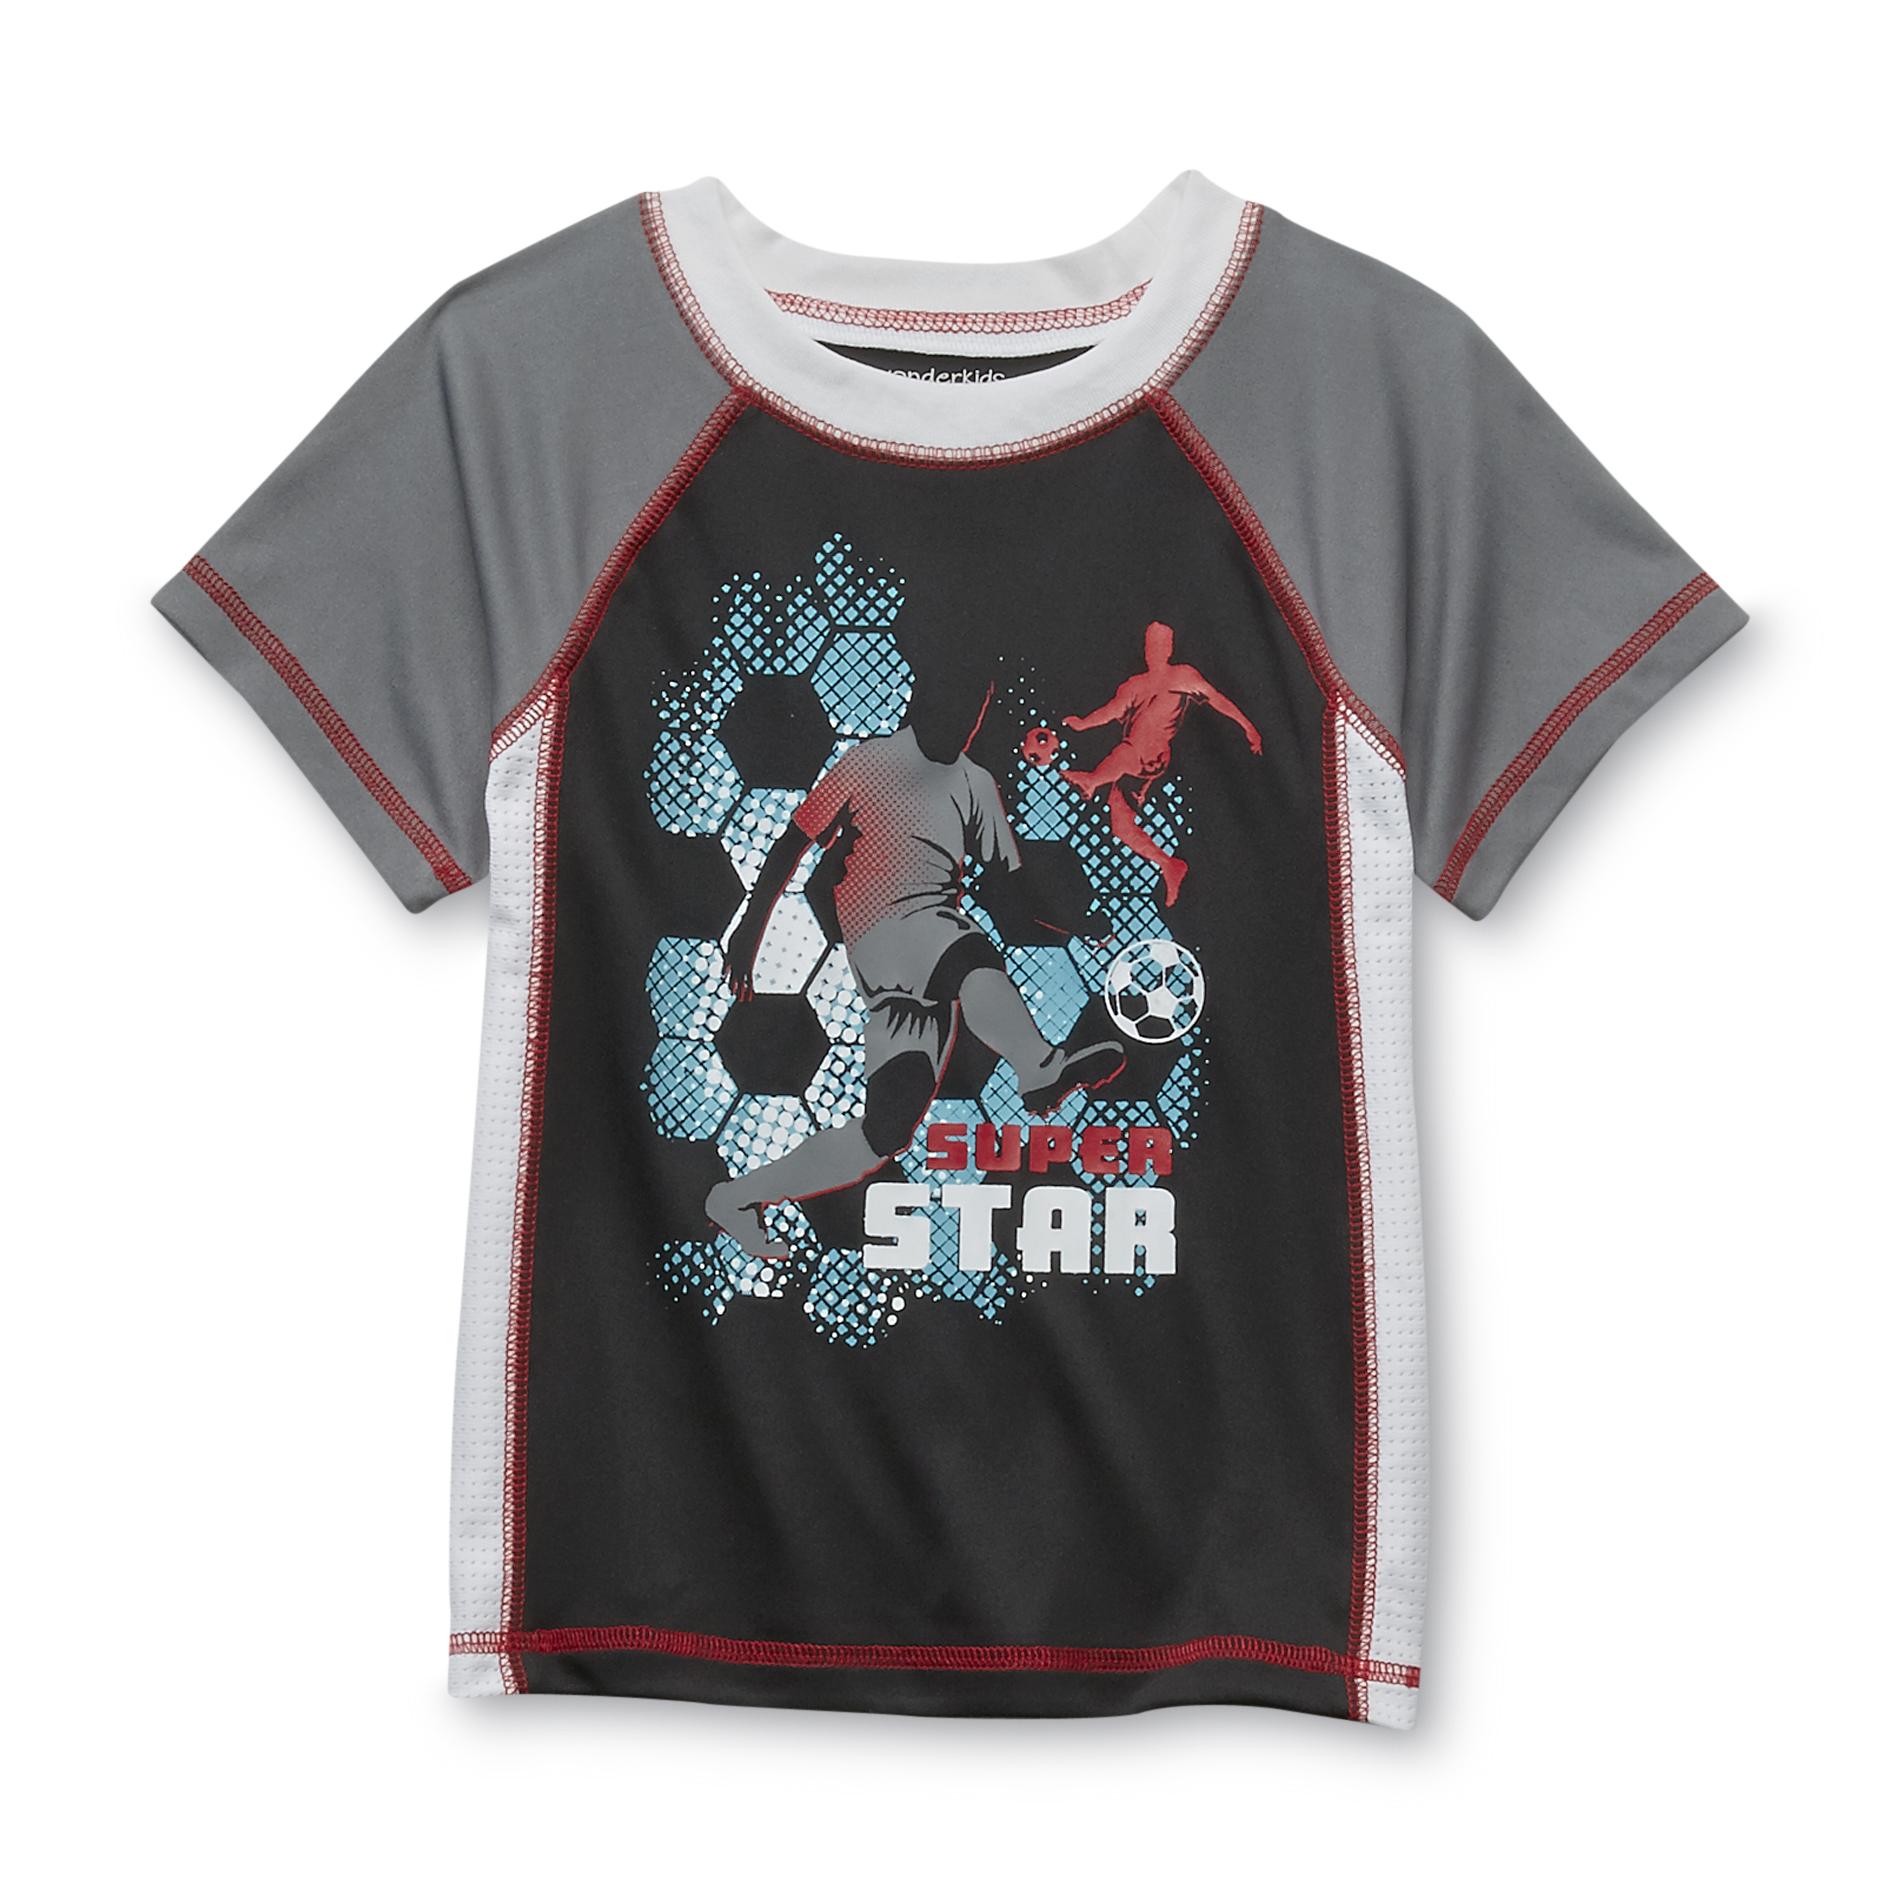 WonderKids Toddler Boy's Sports Jersey - Soccer